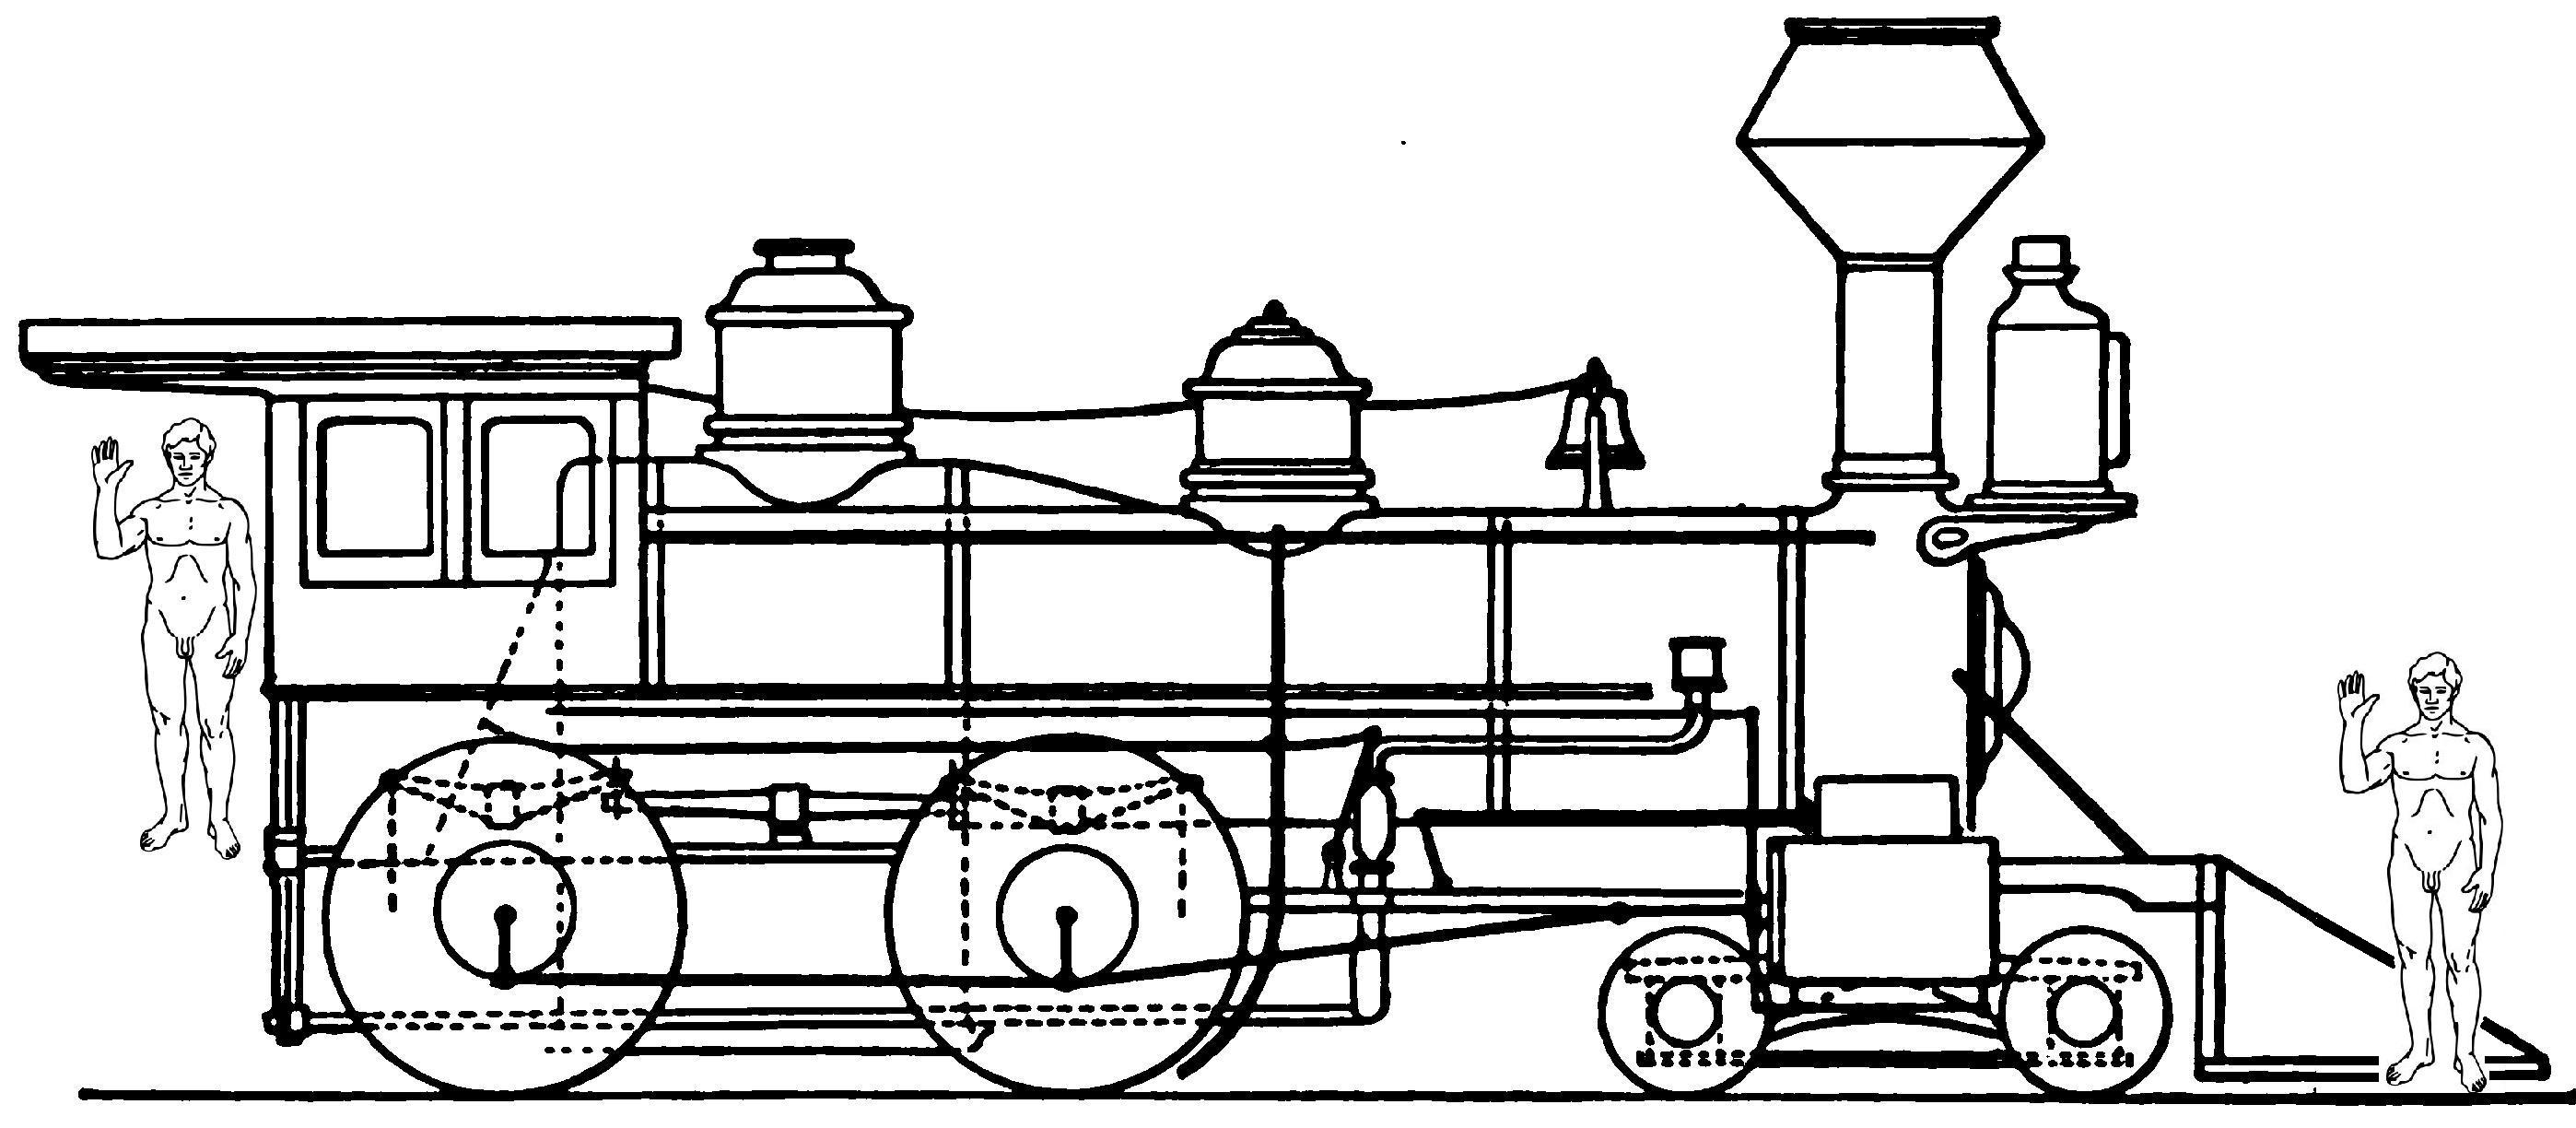 File:Train scale 1 1a - Wikimedia Commons